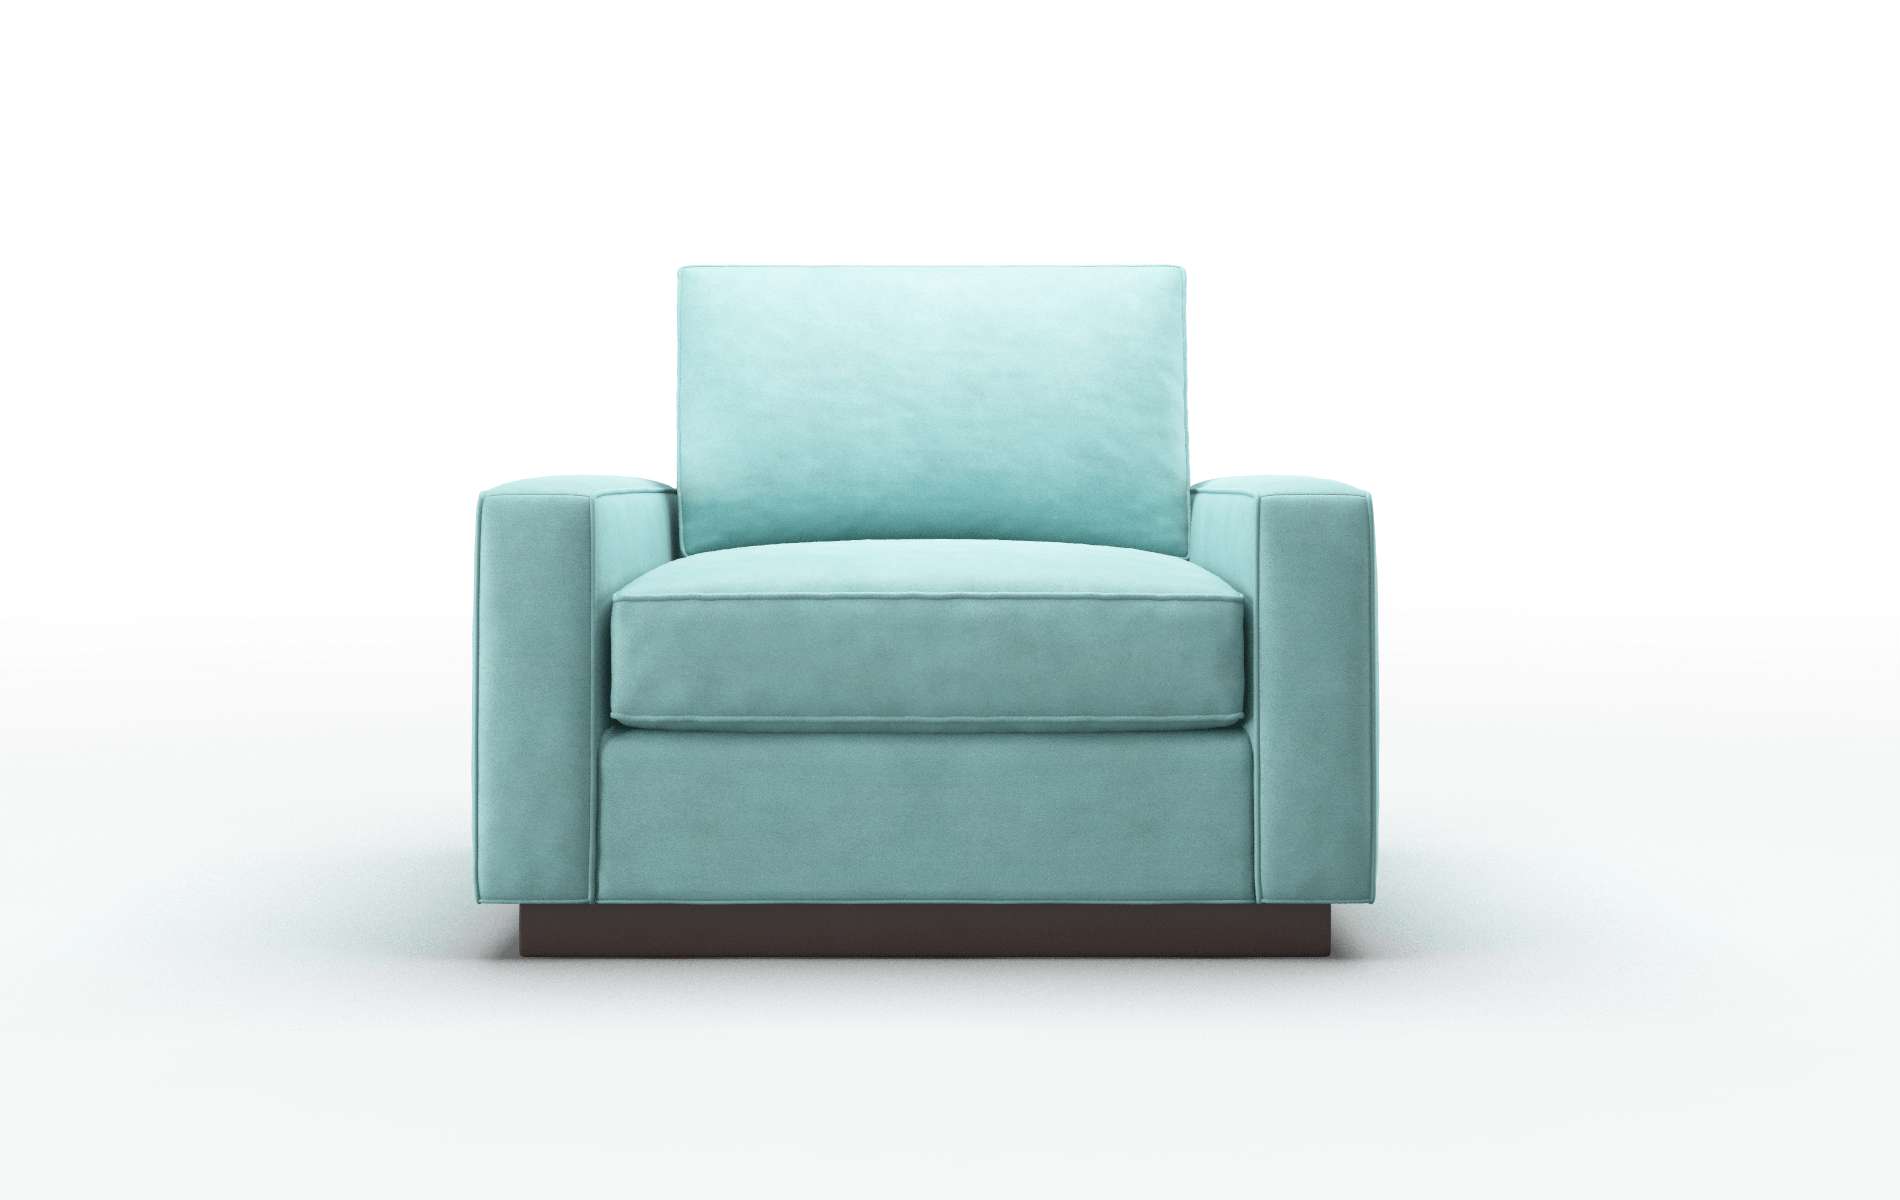 Alton Dream_d French_blue Chair espresso legs 1